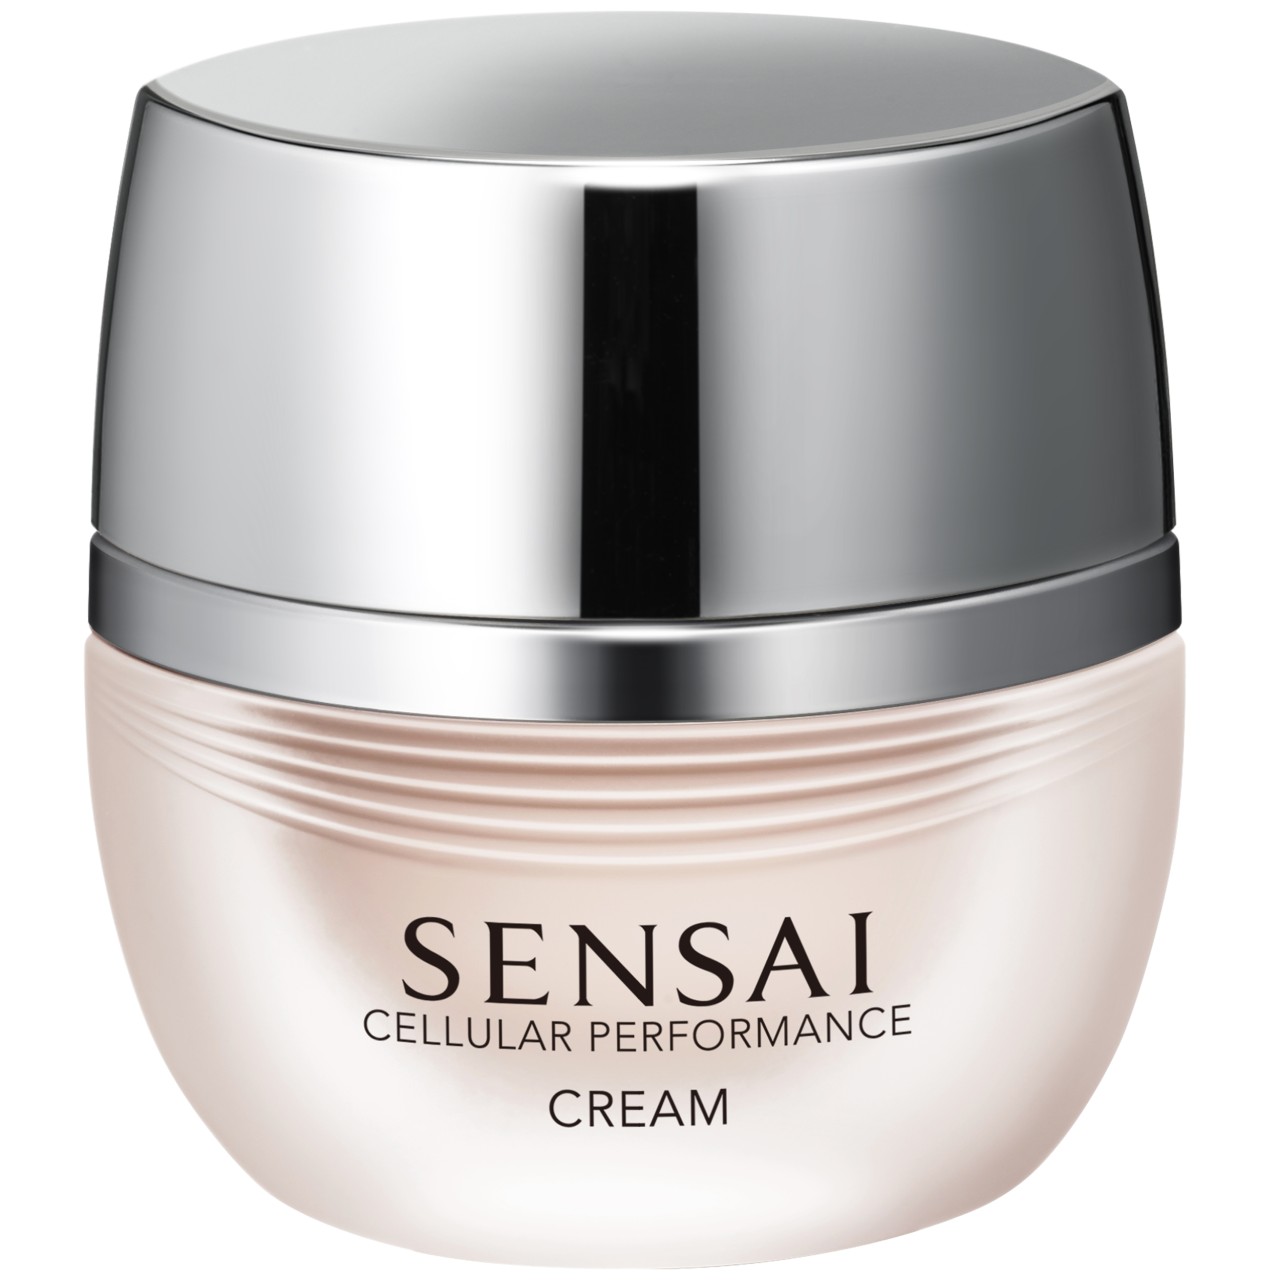 SENSAI Cellular Performance Cream